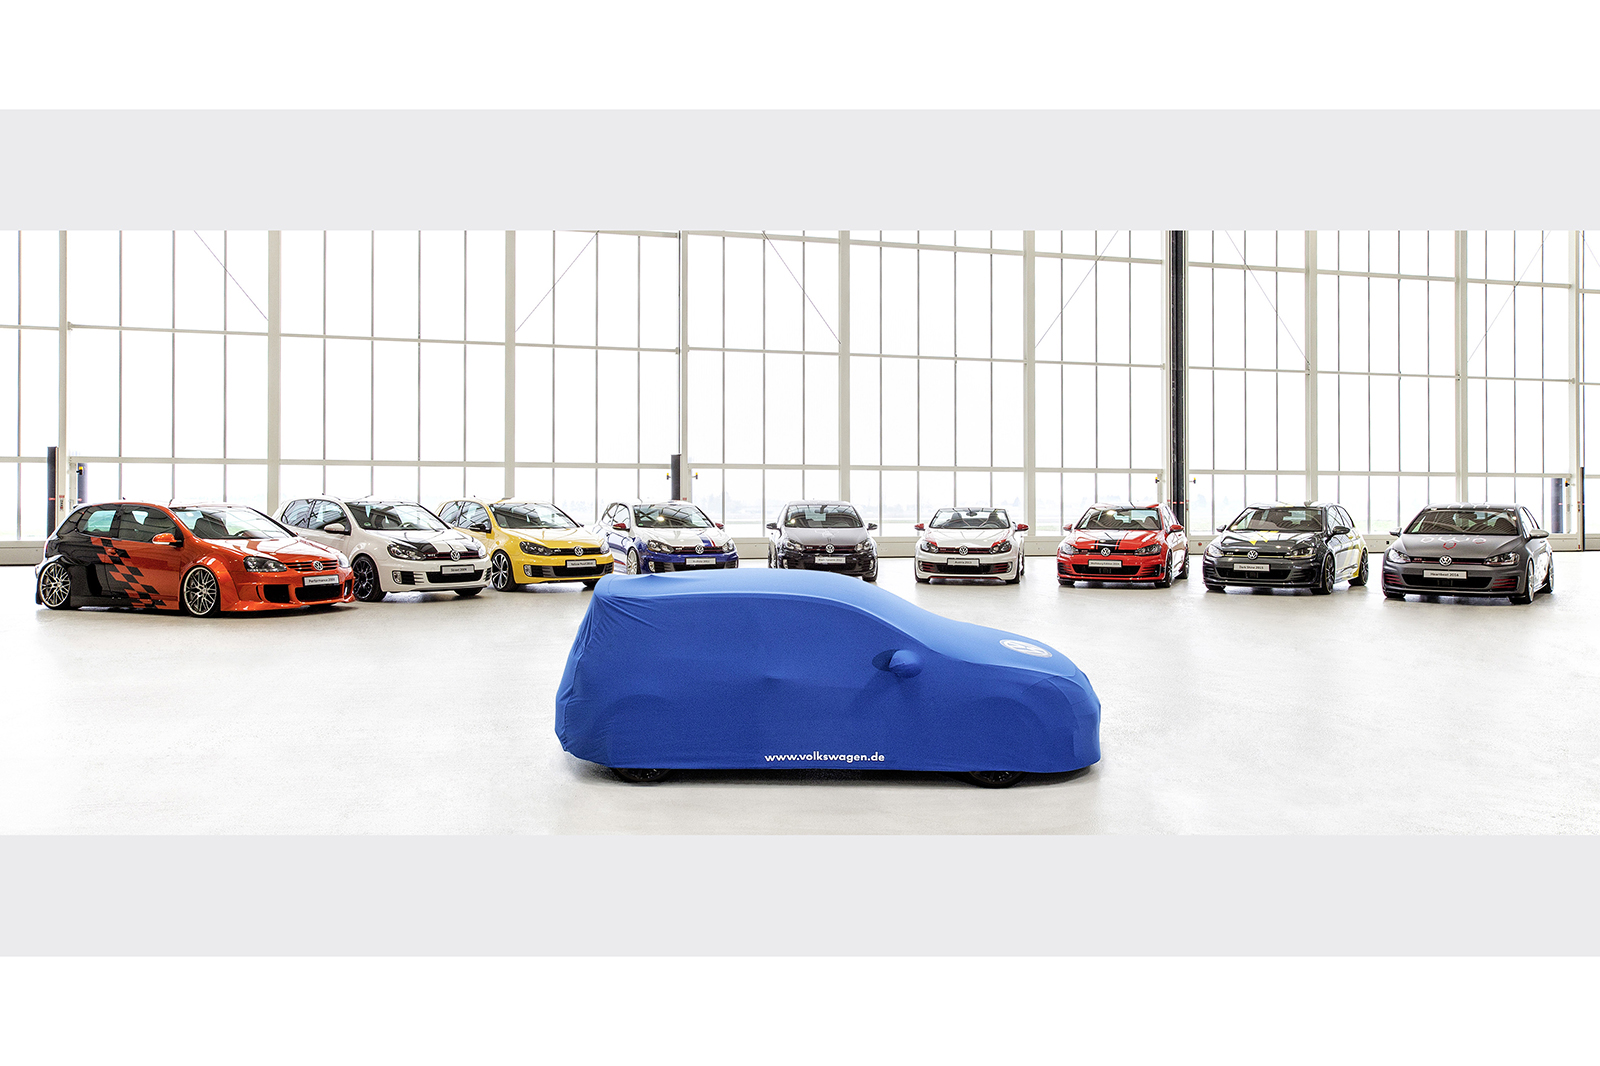 2017 Концепт Volkswagen Golf GTI Worthersee готов к раскрытию